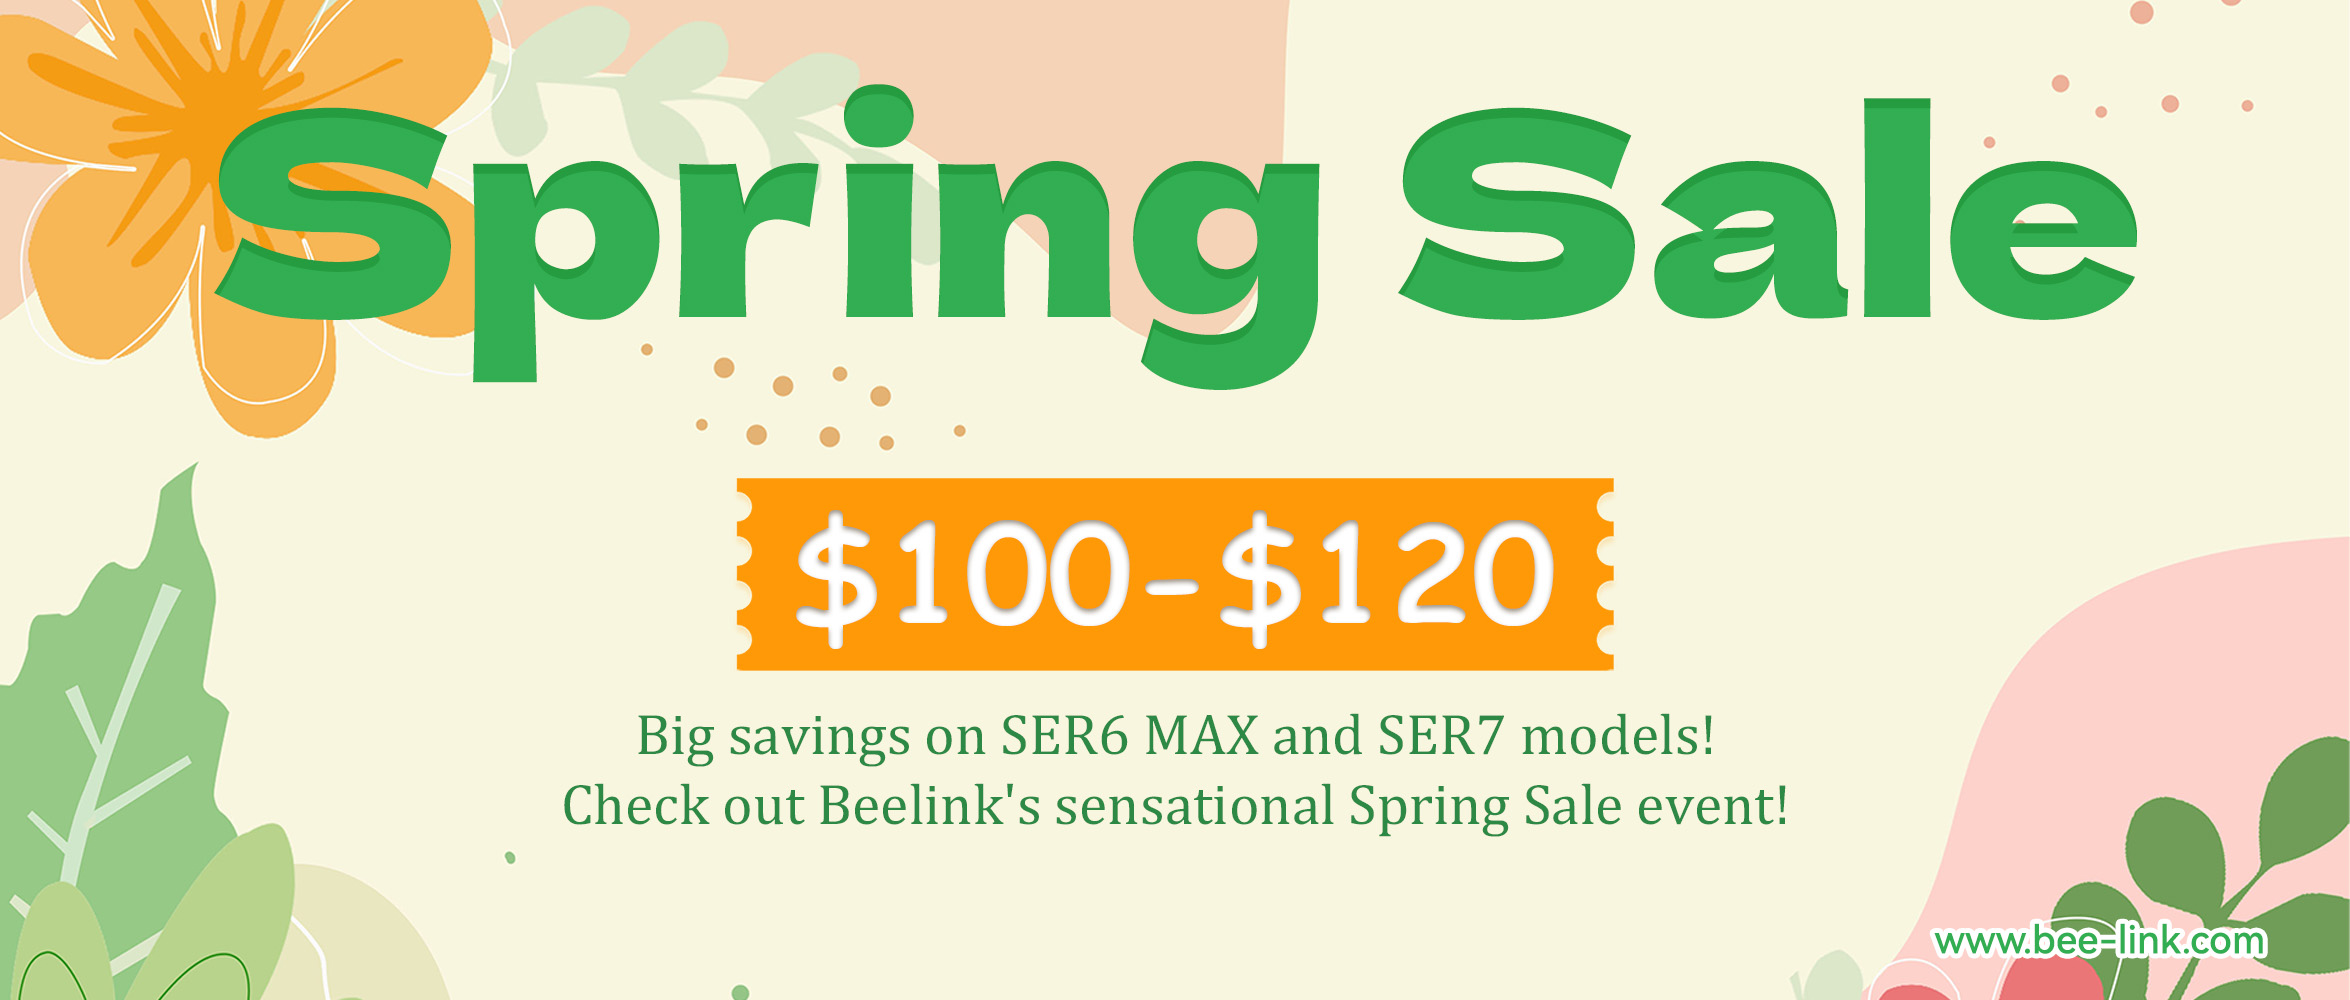 Beelink Spring Sale Alert!